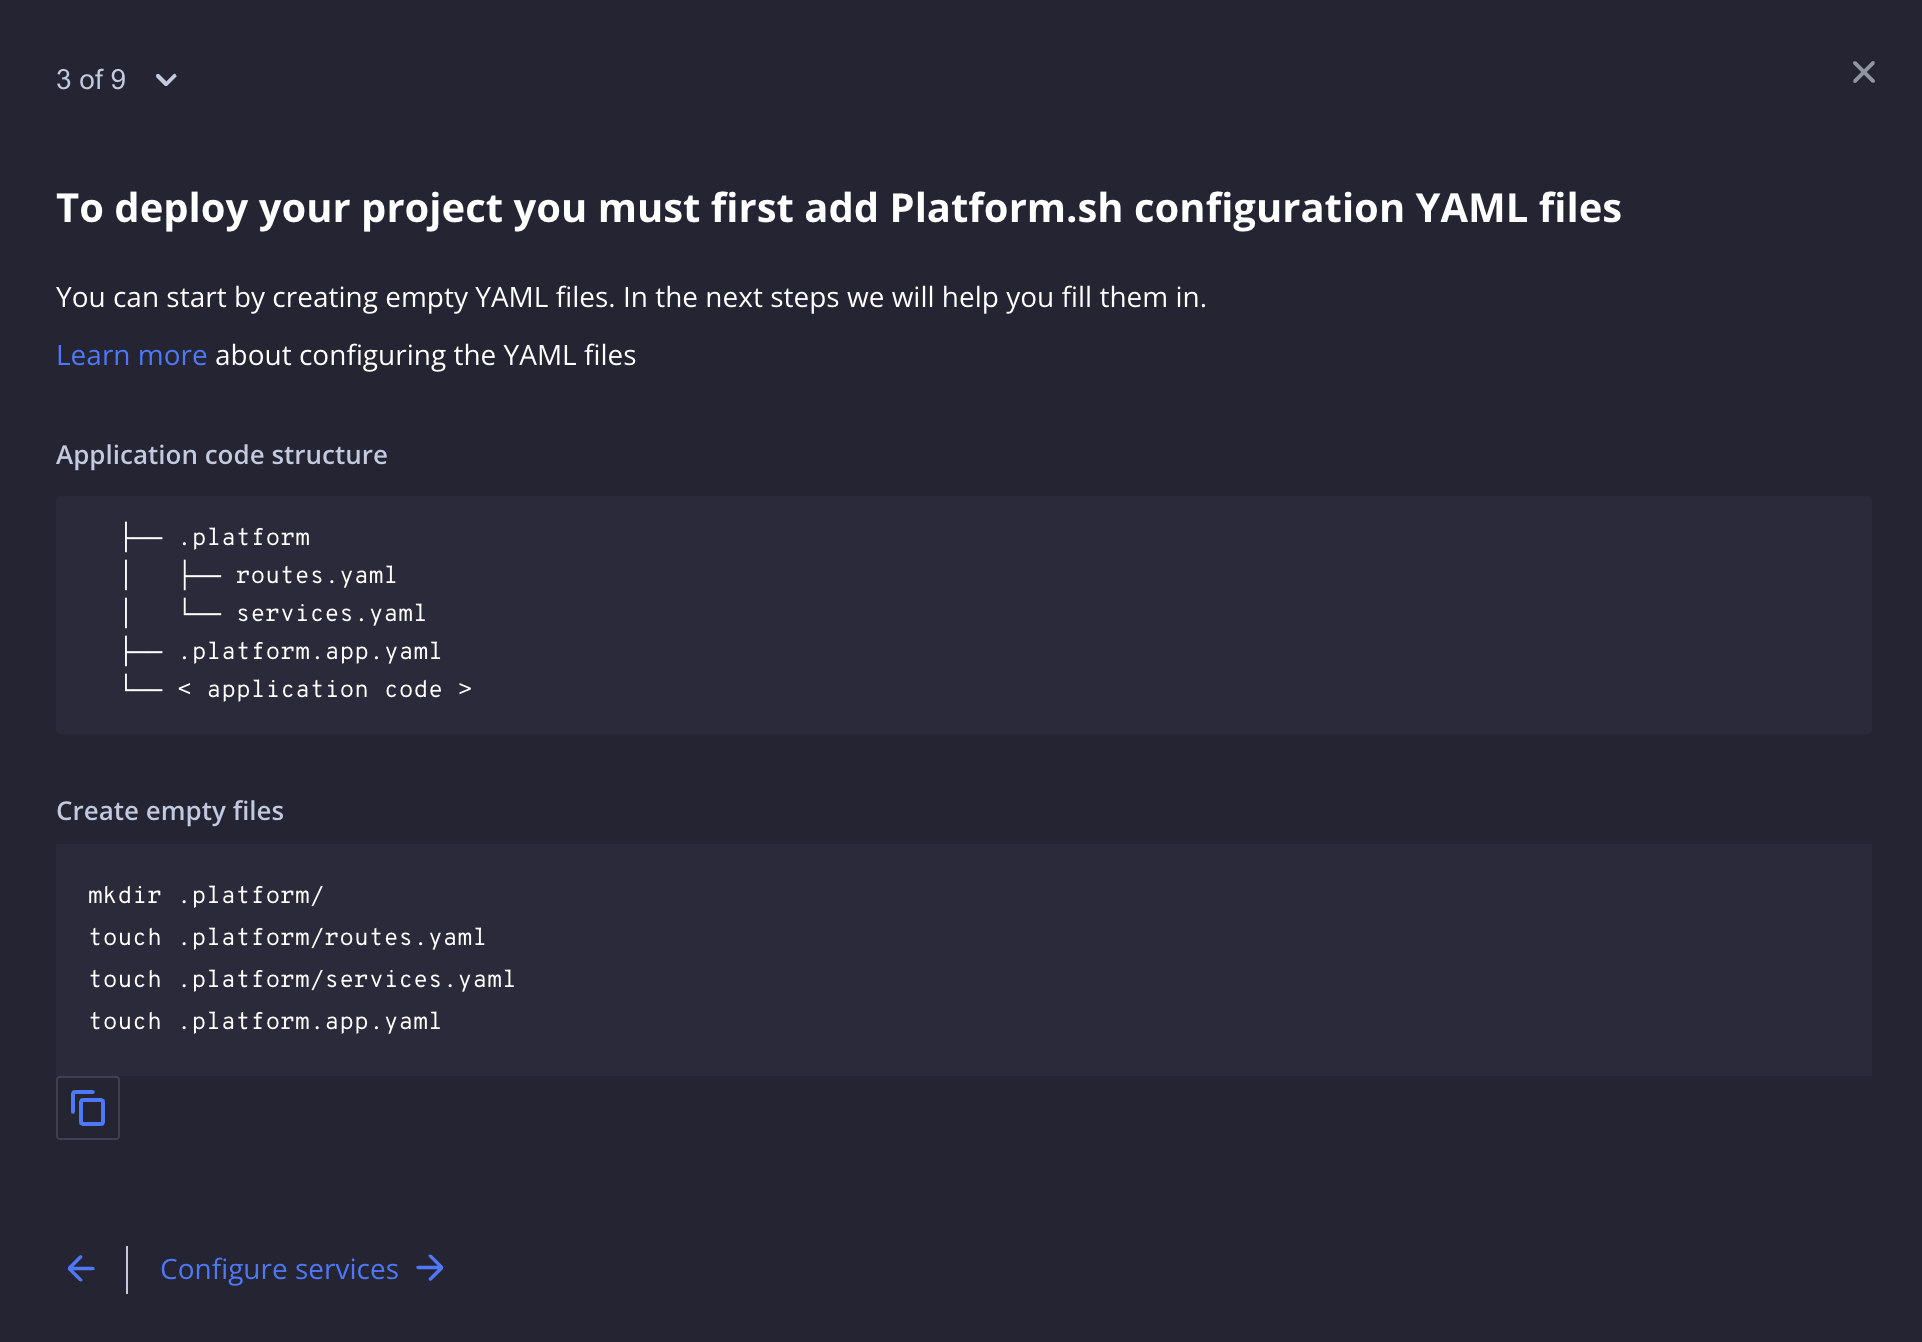 Platform.sh: Configuring our project